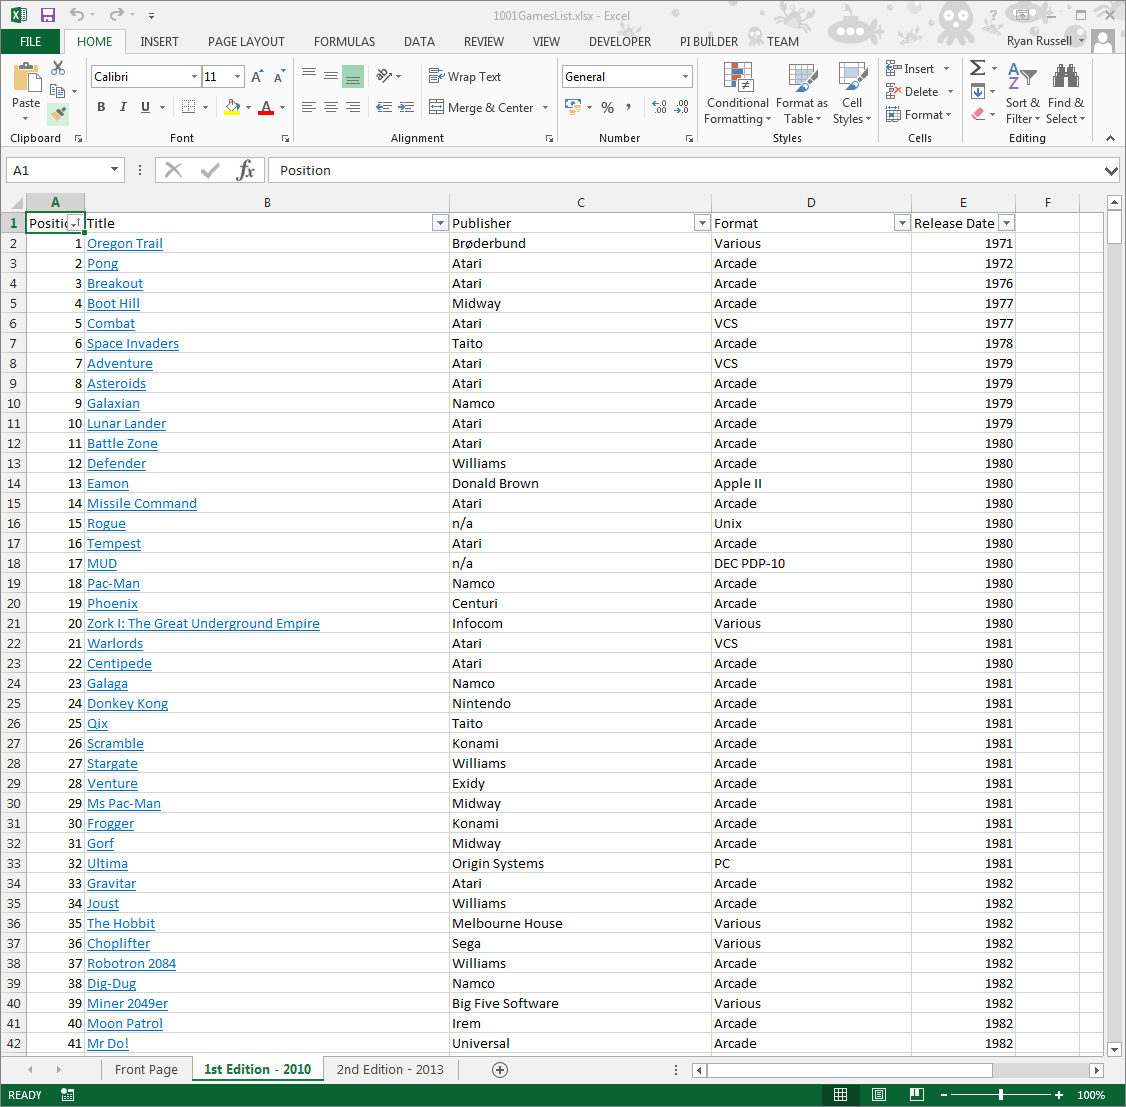 Spreadsheet of 1001 Games list